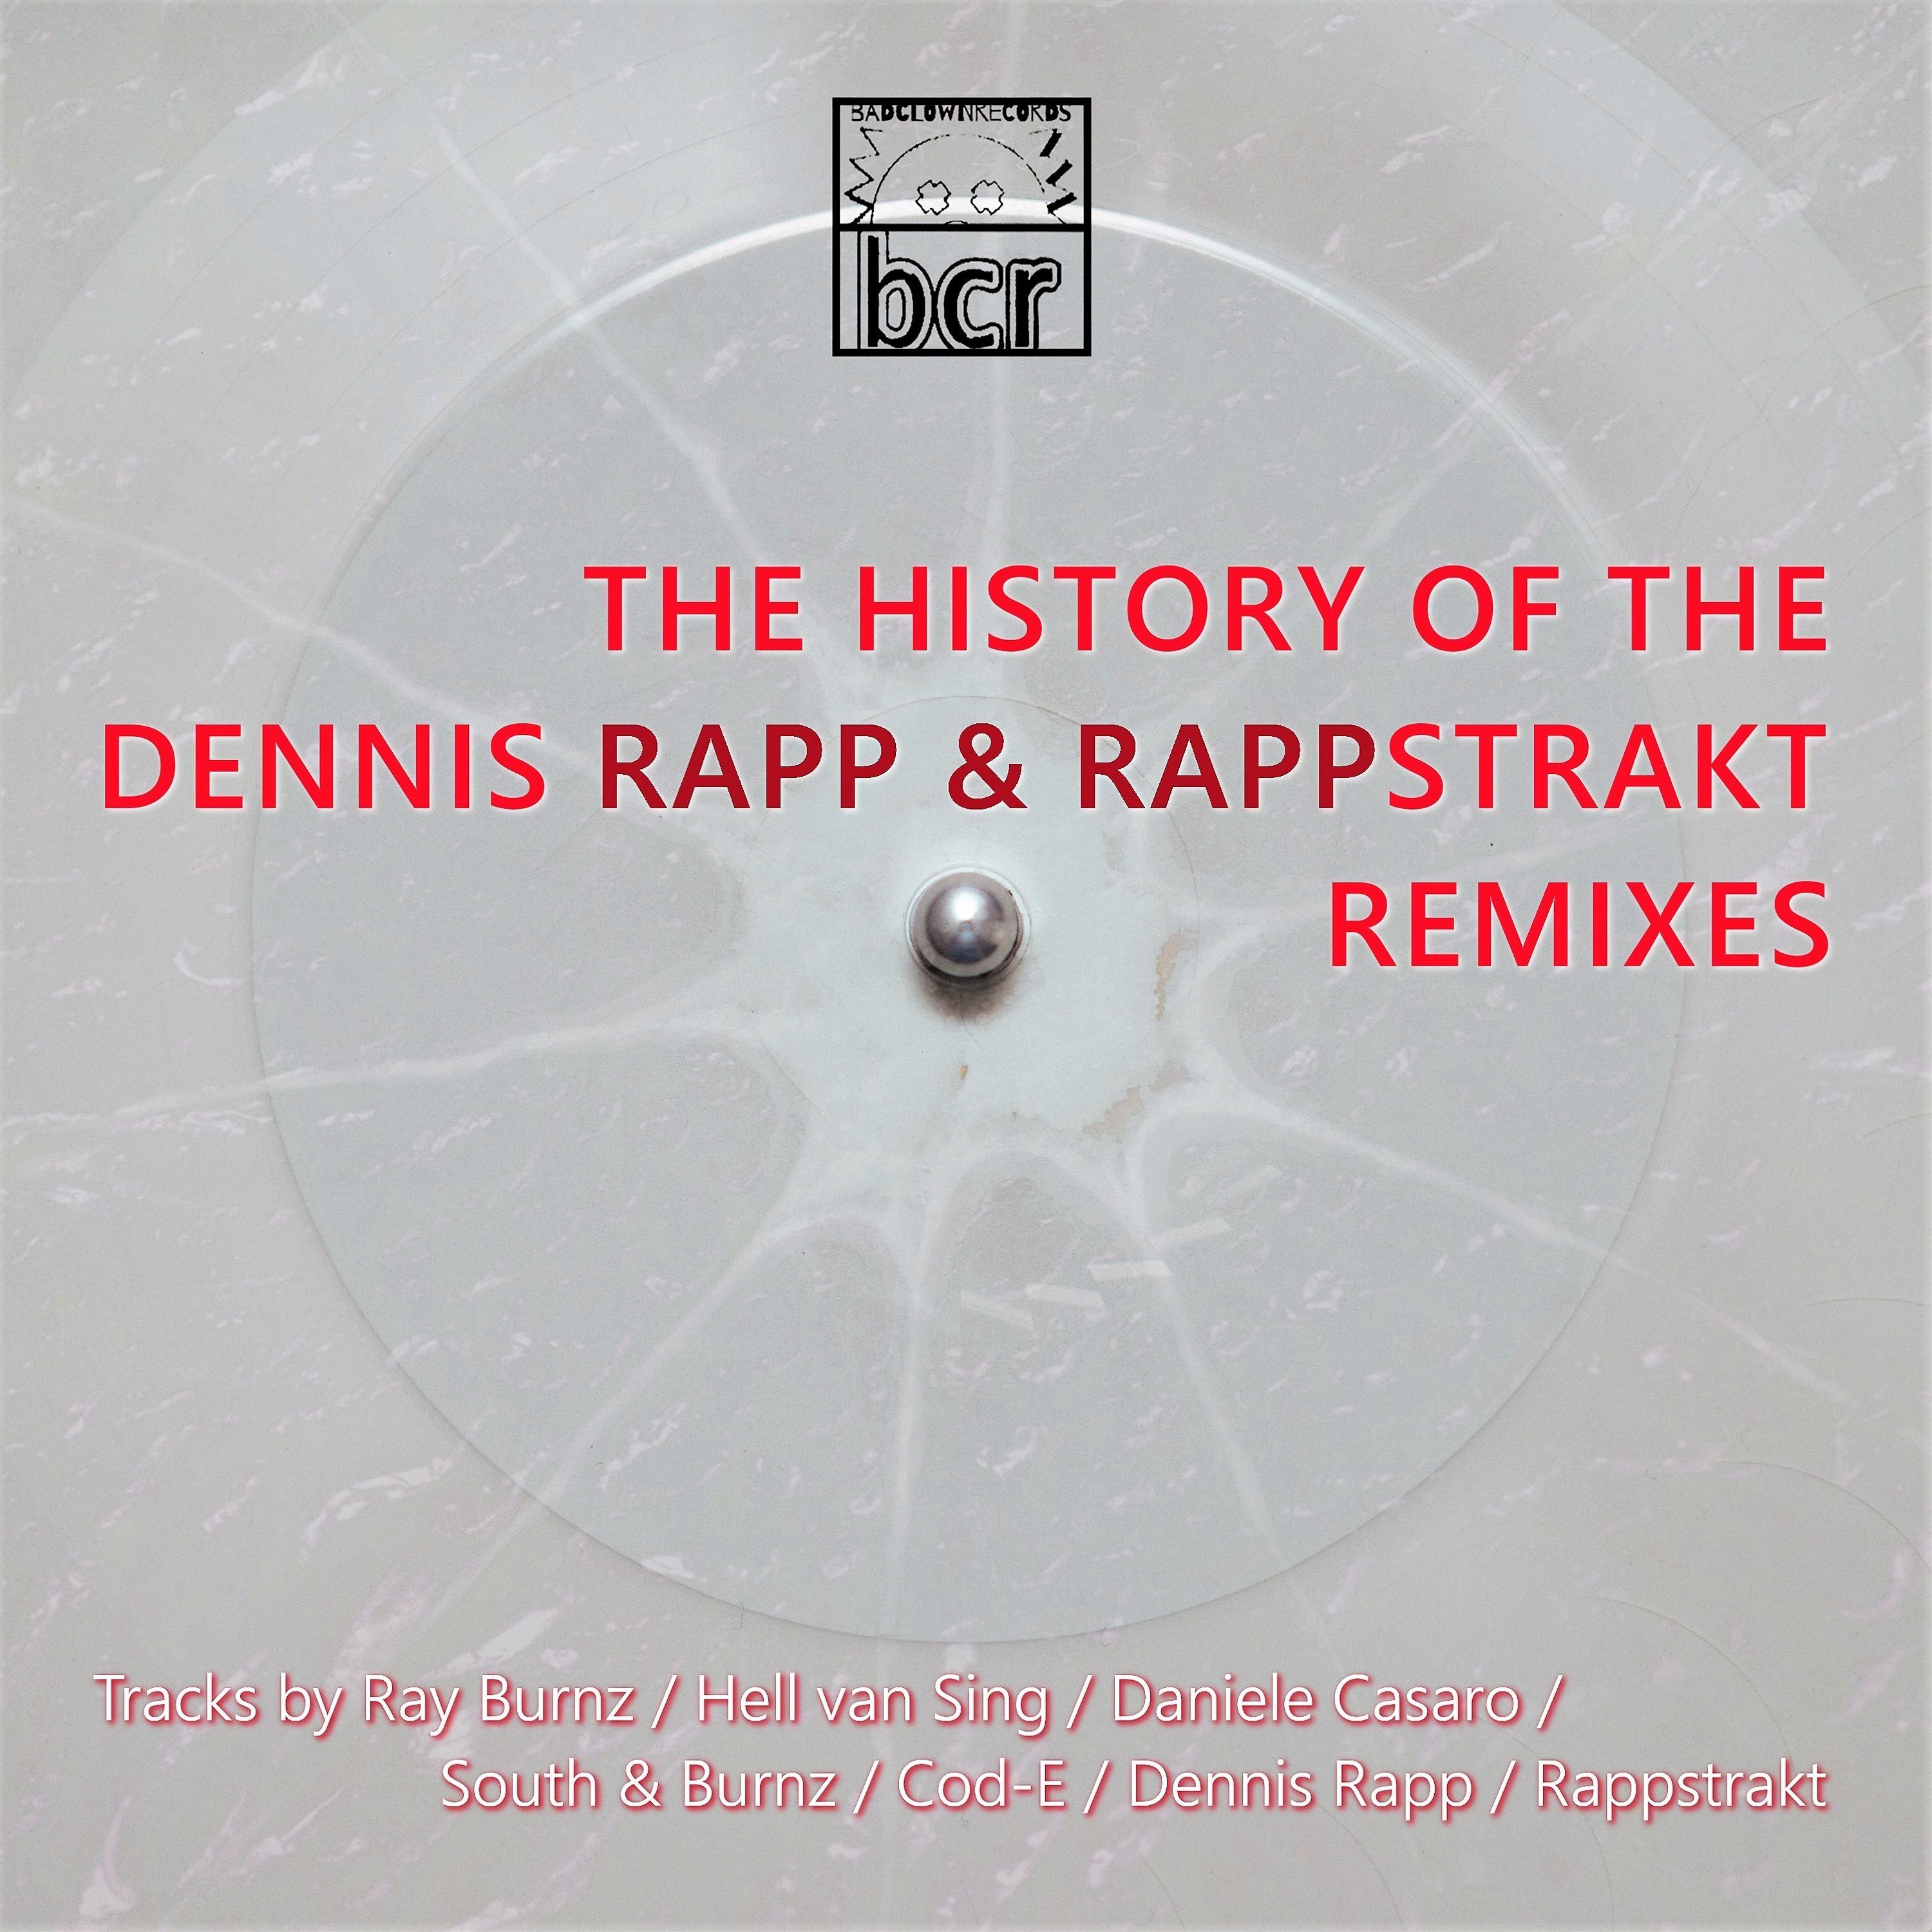 Ray Burnz - Fck the Club (Dennis Rapp Remix)